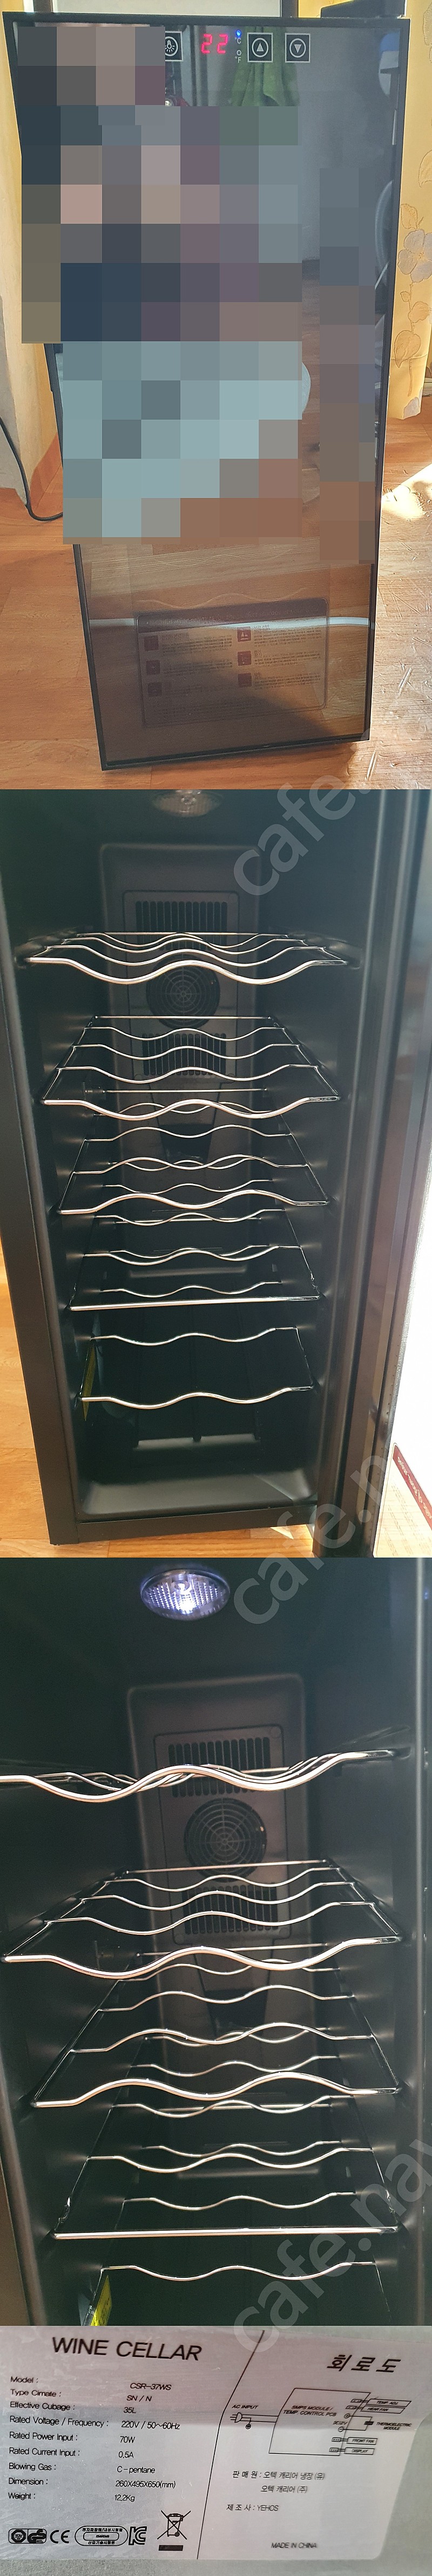 CSR-37WS 캐리어 와인 냉장고 35리터 팝니다 (광주광역시 직거래만)